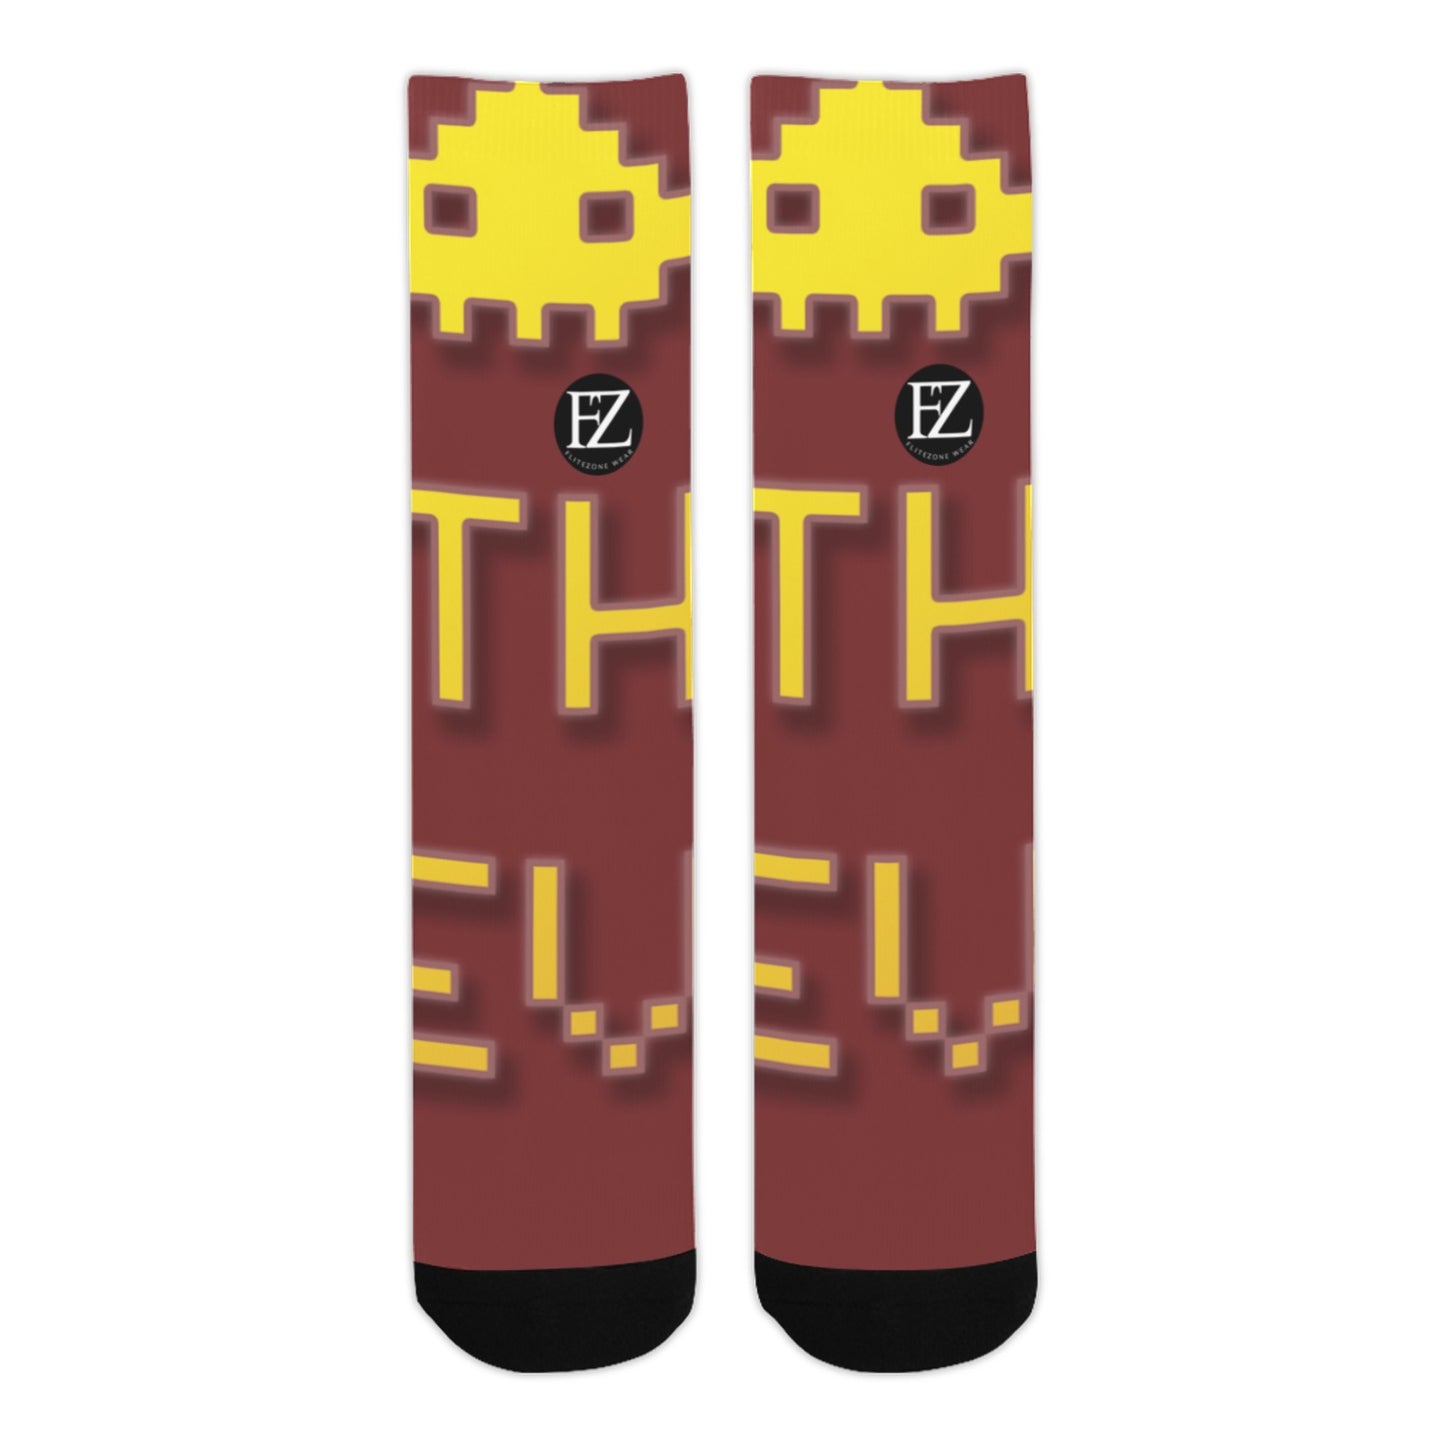 fz unisex socks - yellow one size / fz socks - burgundy sublimated crew socks(made in usa)